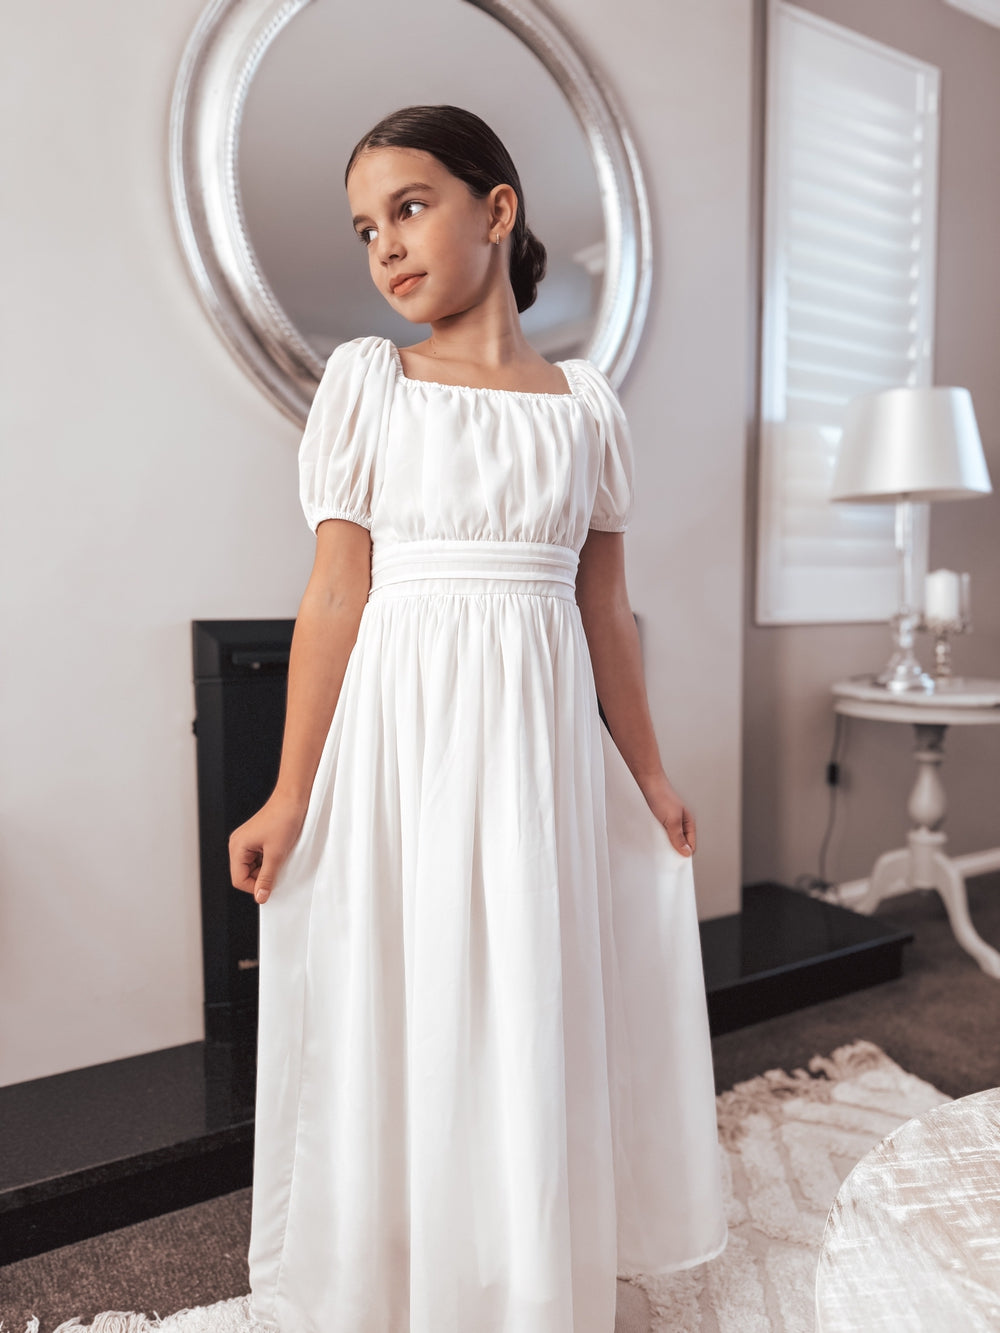 Emilia Girls White Dress - All Products